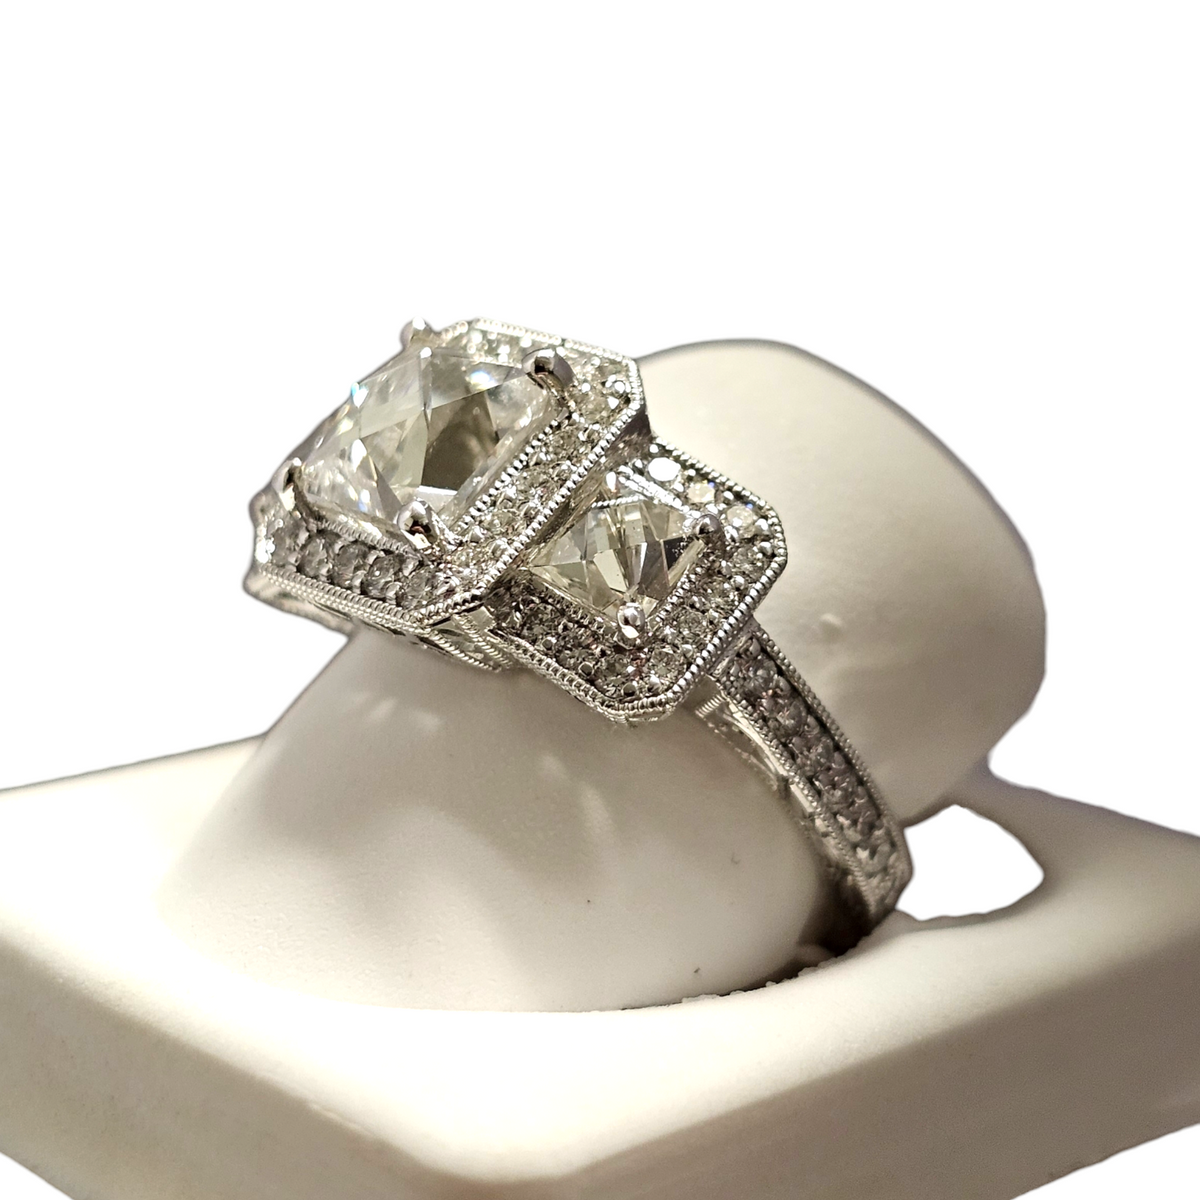 18Kt White Gold French Cut 1.5 Carat Center Diamond Ring